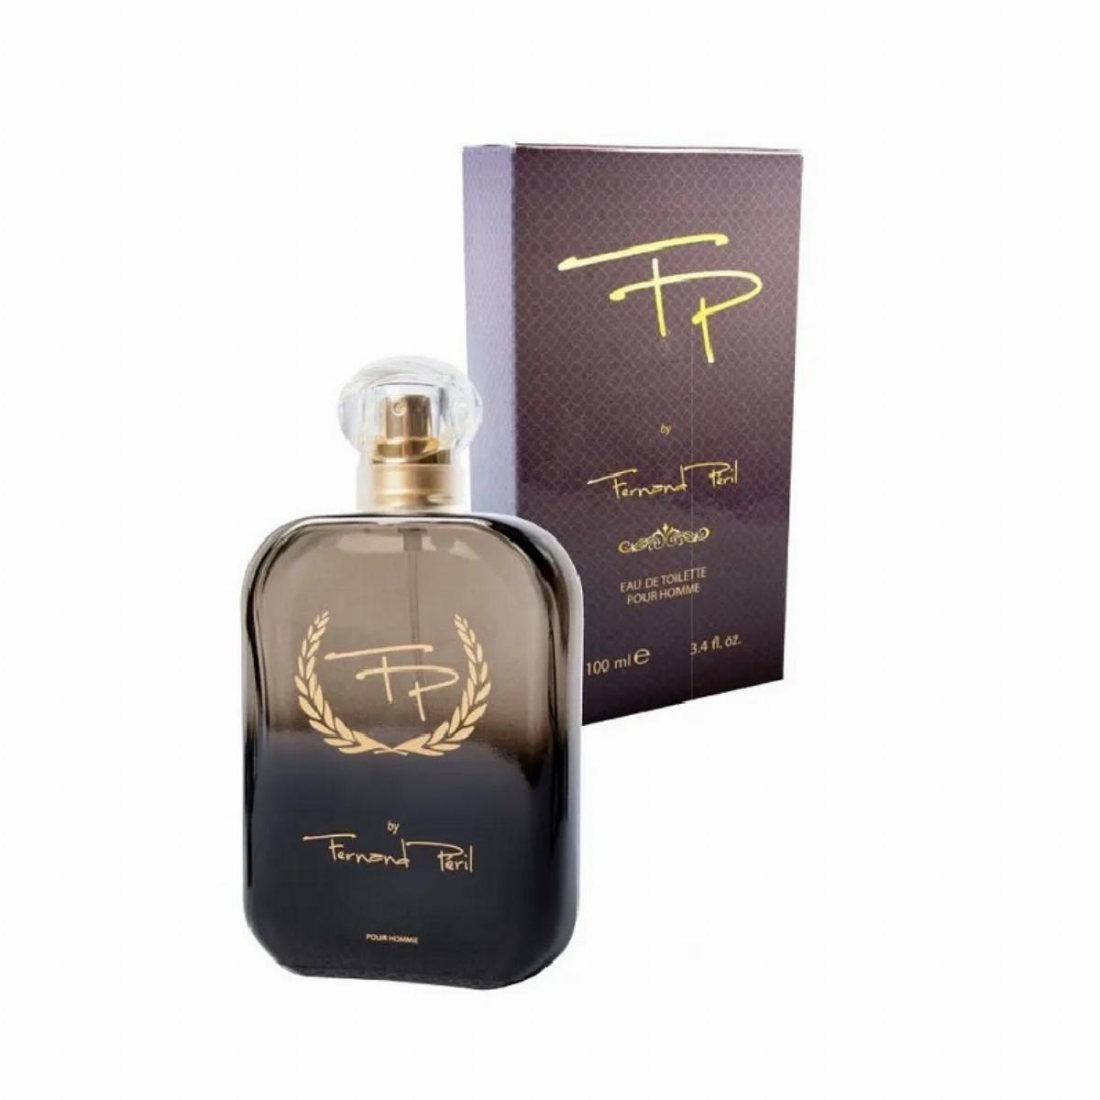 FP by Fernand Péril - Pheromone Perfume Men - 100ml